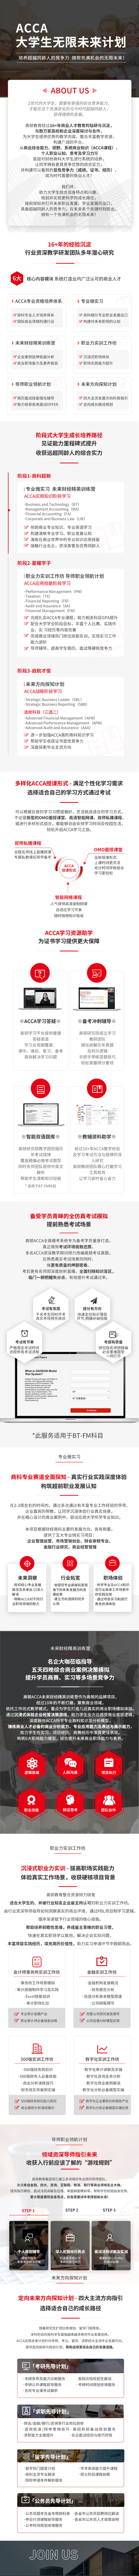 https://simg01.gaodunwangxiao.com/uploadfiles/product-center/202209/26/cc1db_20220926133054.jpg